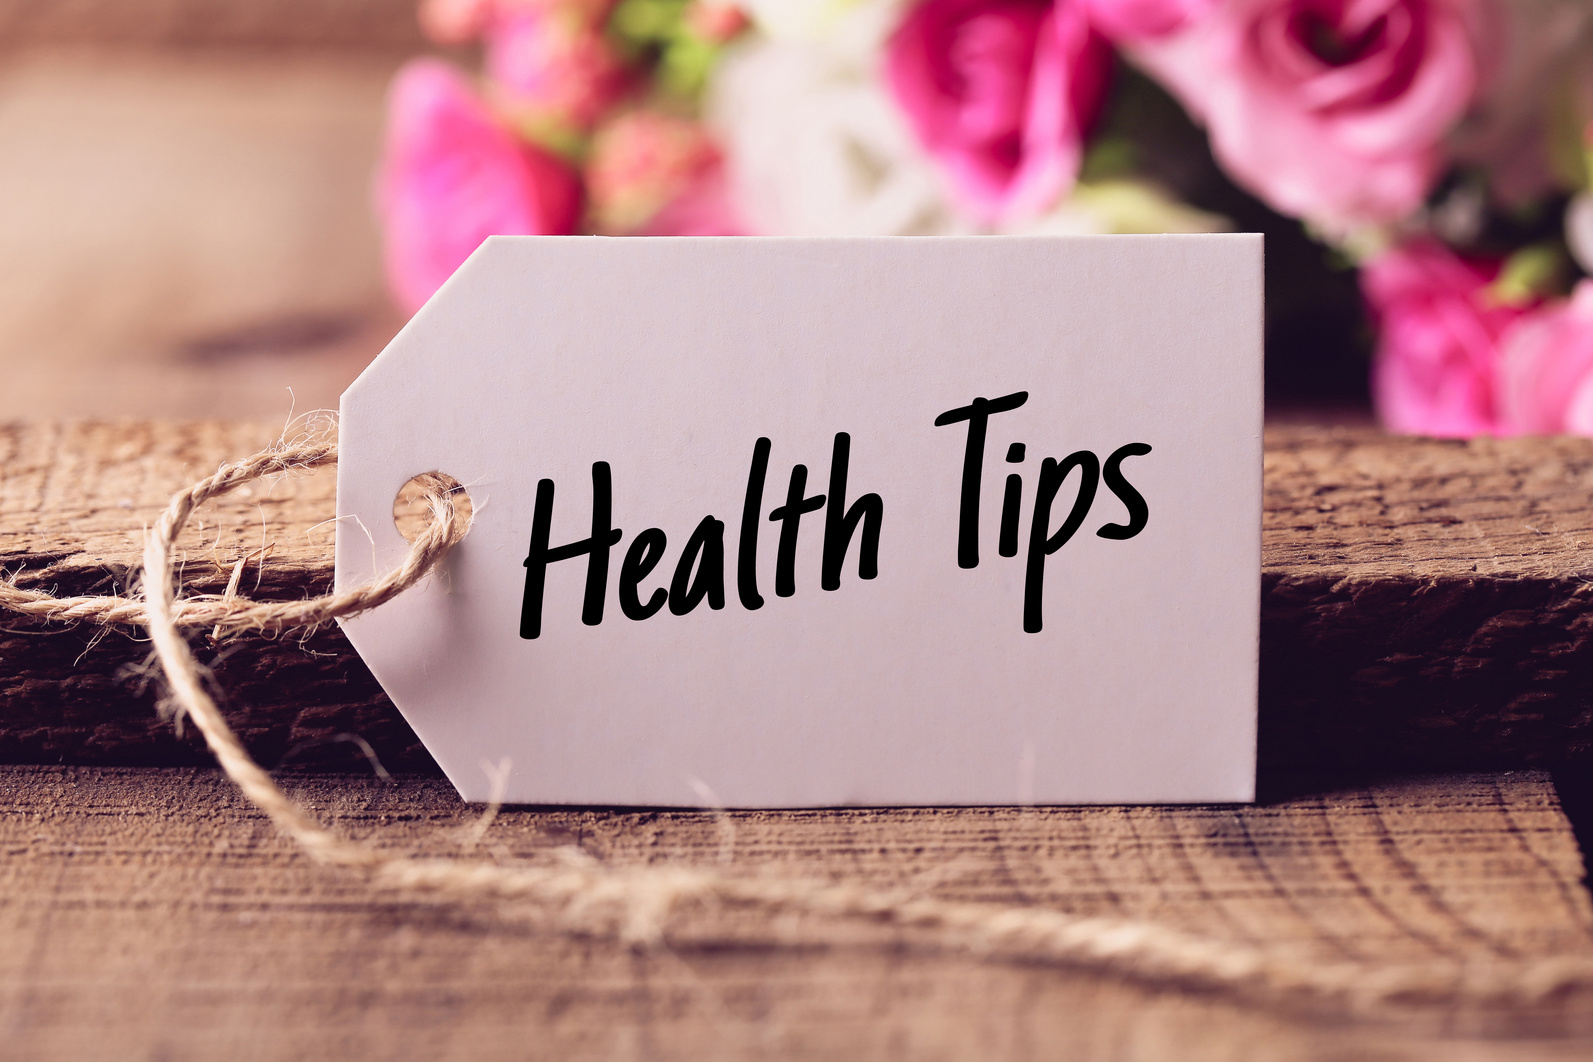 Health Tips Text